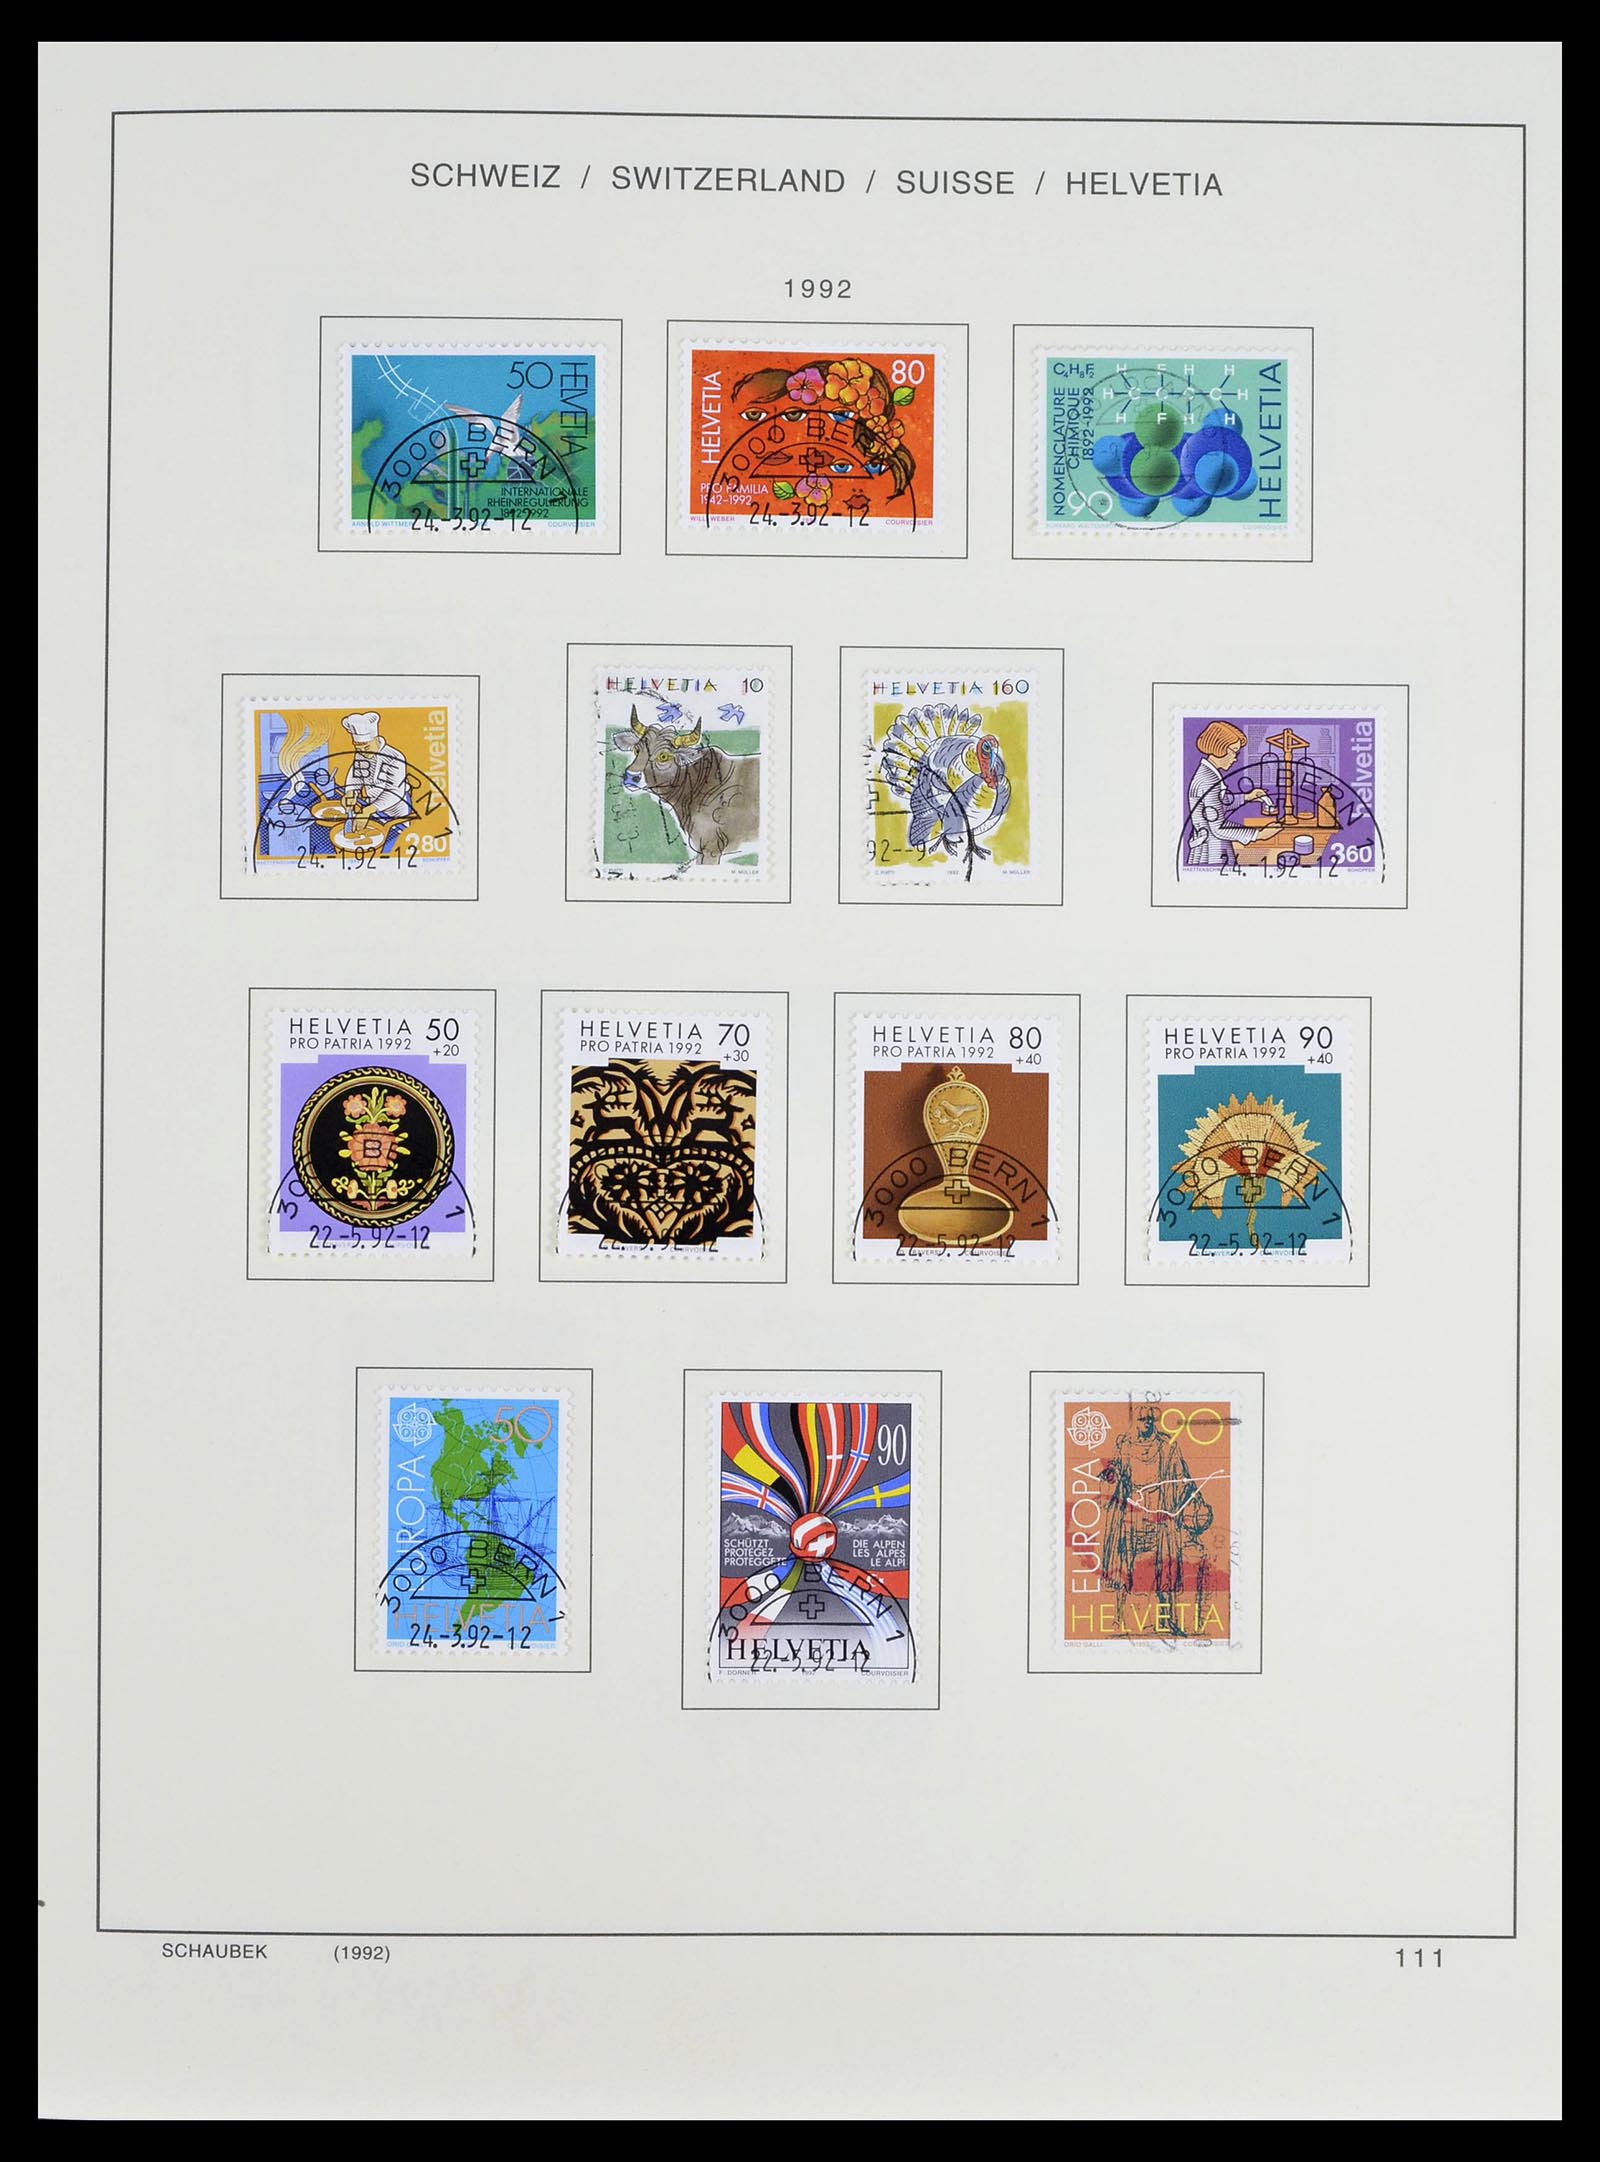 39322 0033 - Stamp collection 39322 Switzerland 1980-2011.